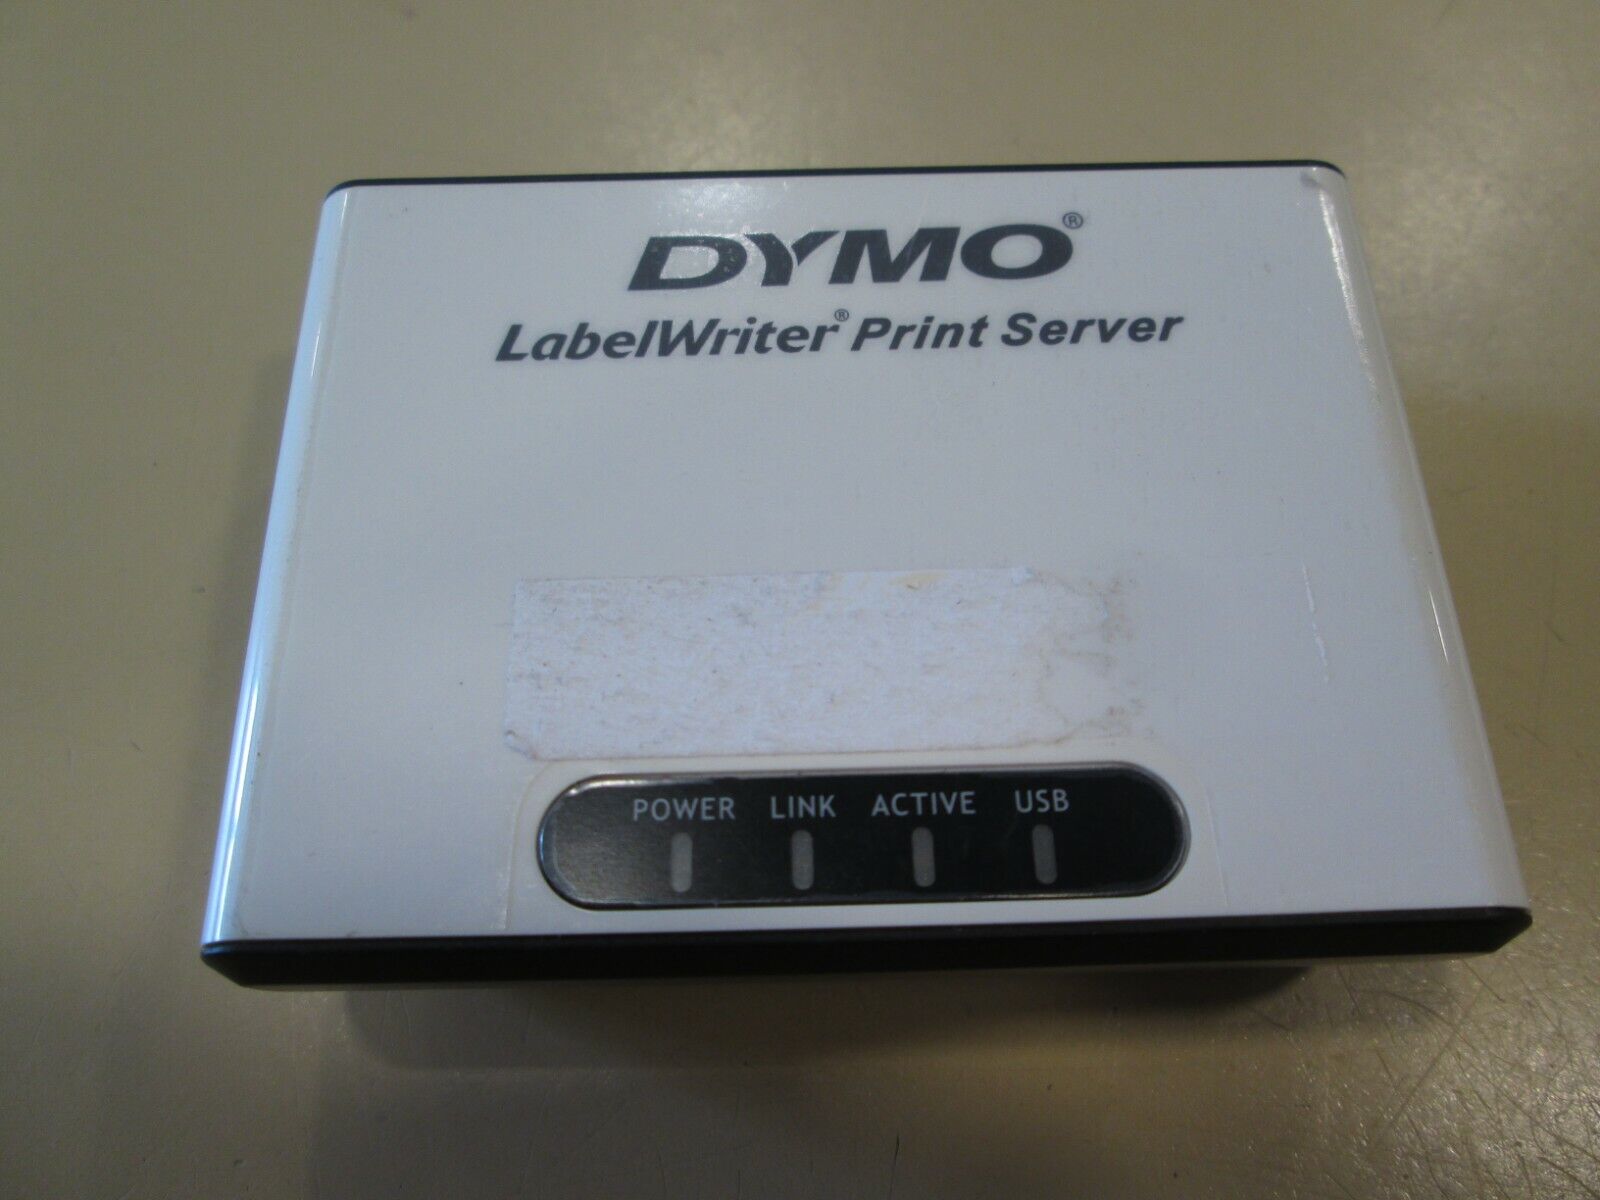 DYMO KC 301 LabelWriter Print Server - No AC adapter